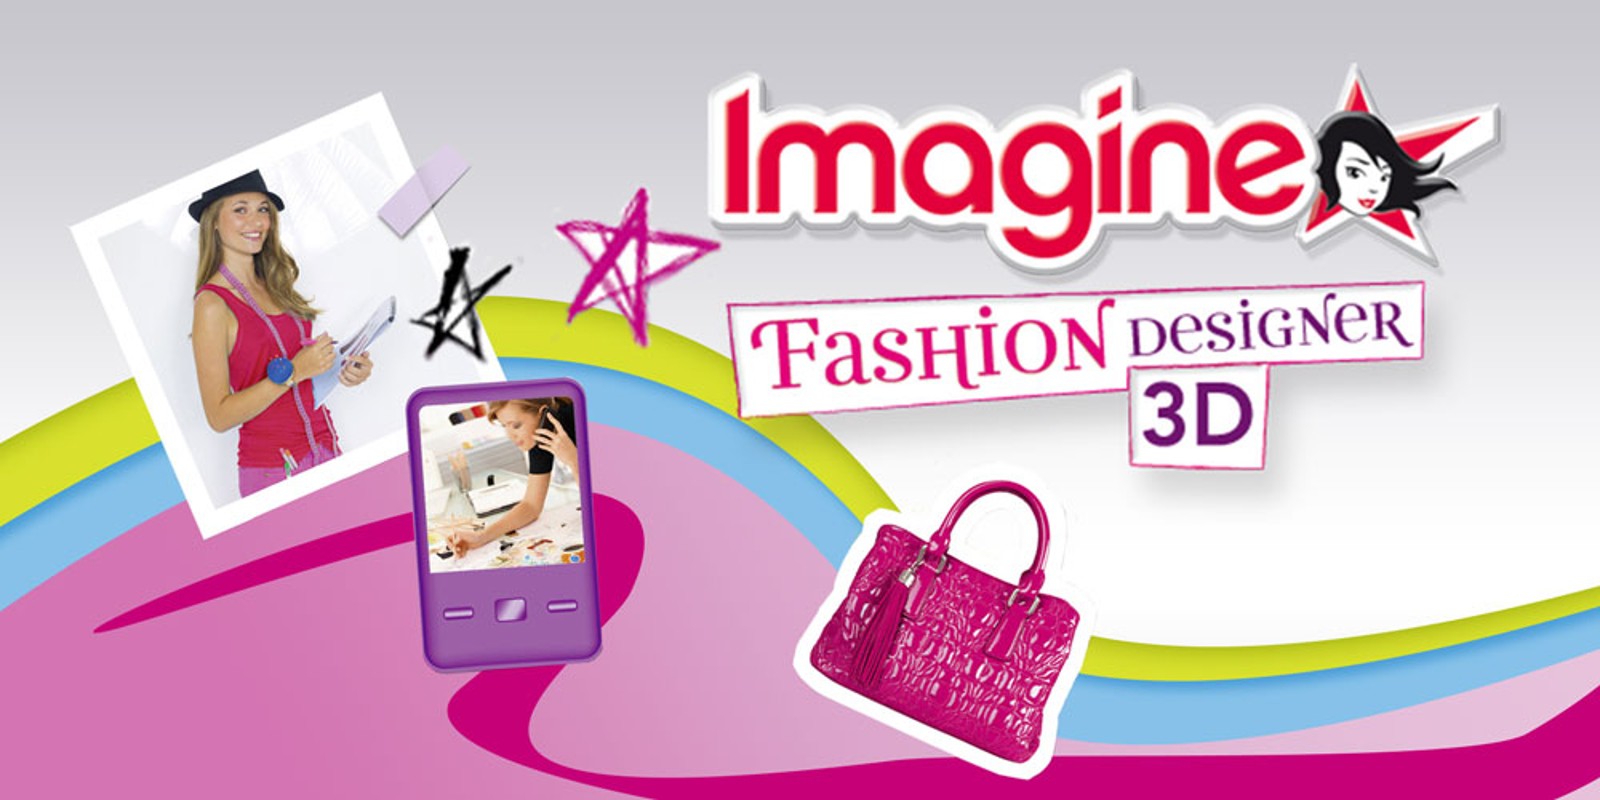 Imagine™ Fashion Designer 3D